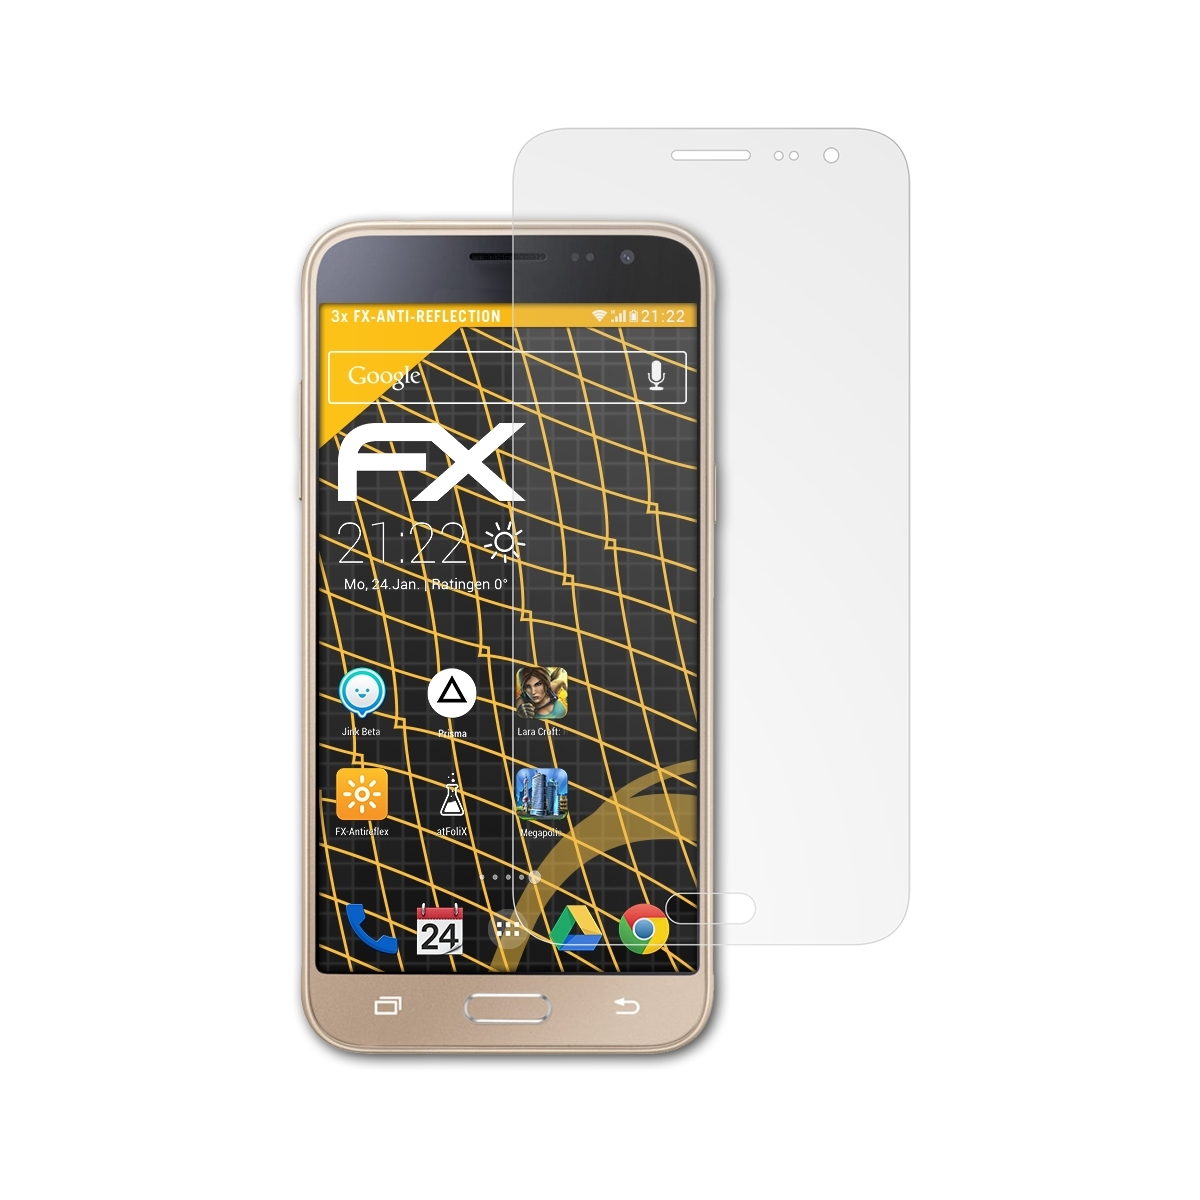 ATFOLIX 3x (SM-J320)) FX-Antireflex Galaxy Displayschutz(für Samsung J3 Pro